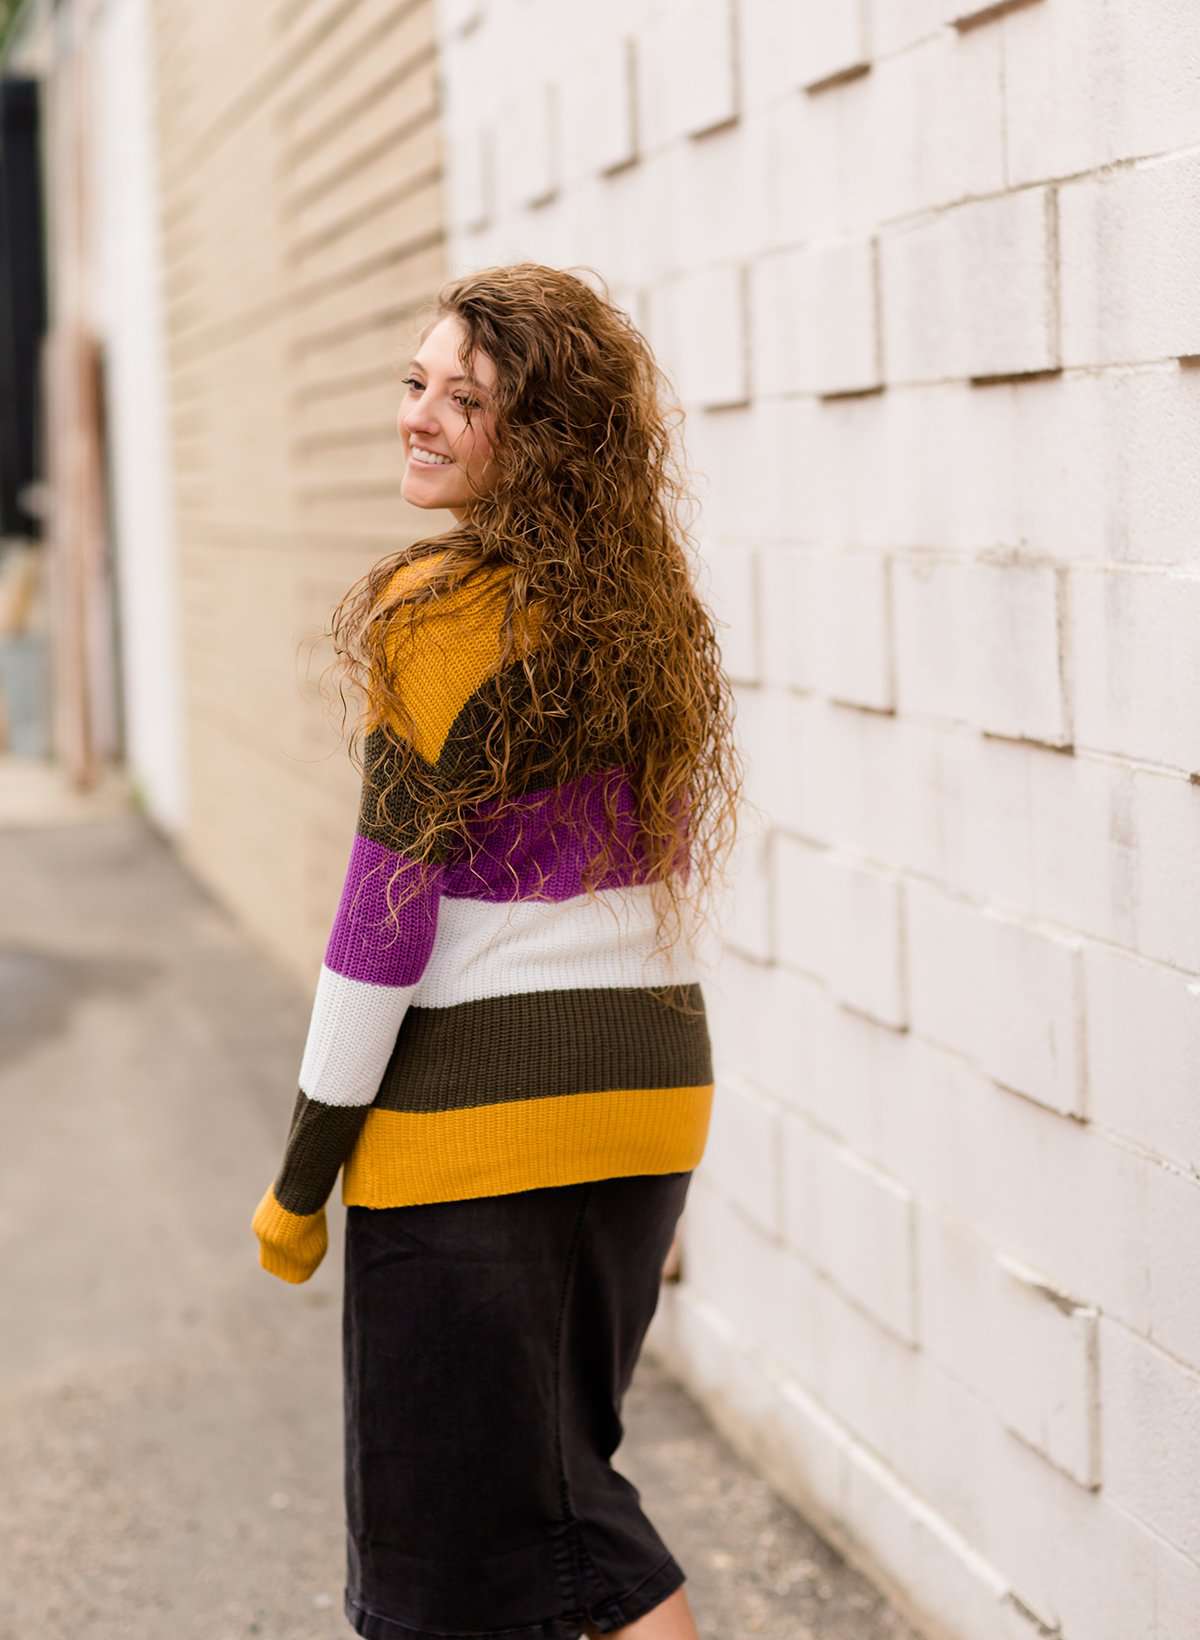 Women's Modest Boat-neck Sweater in Mustard, Olive and Purple stripe